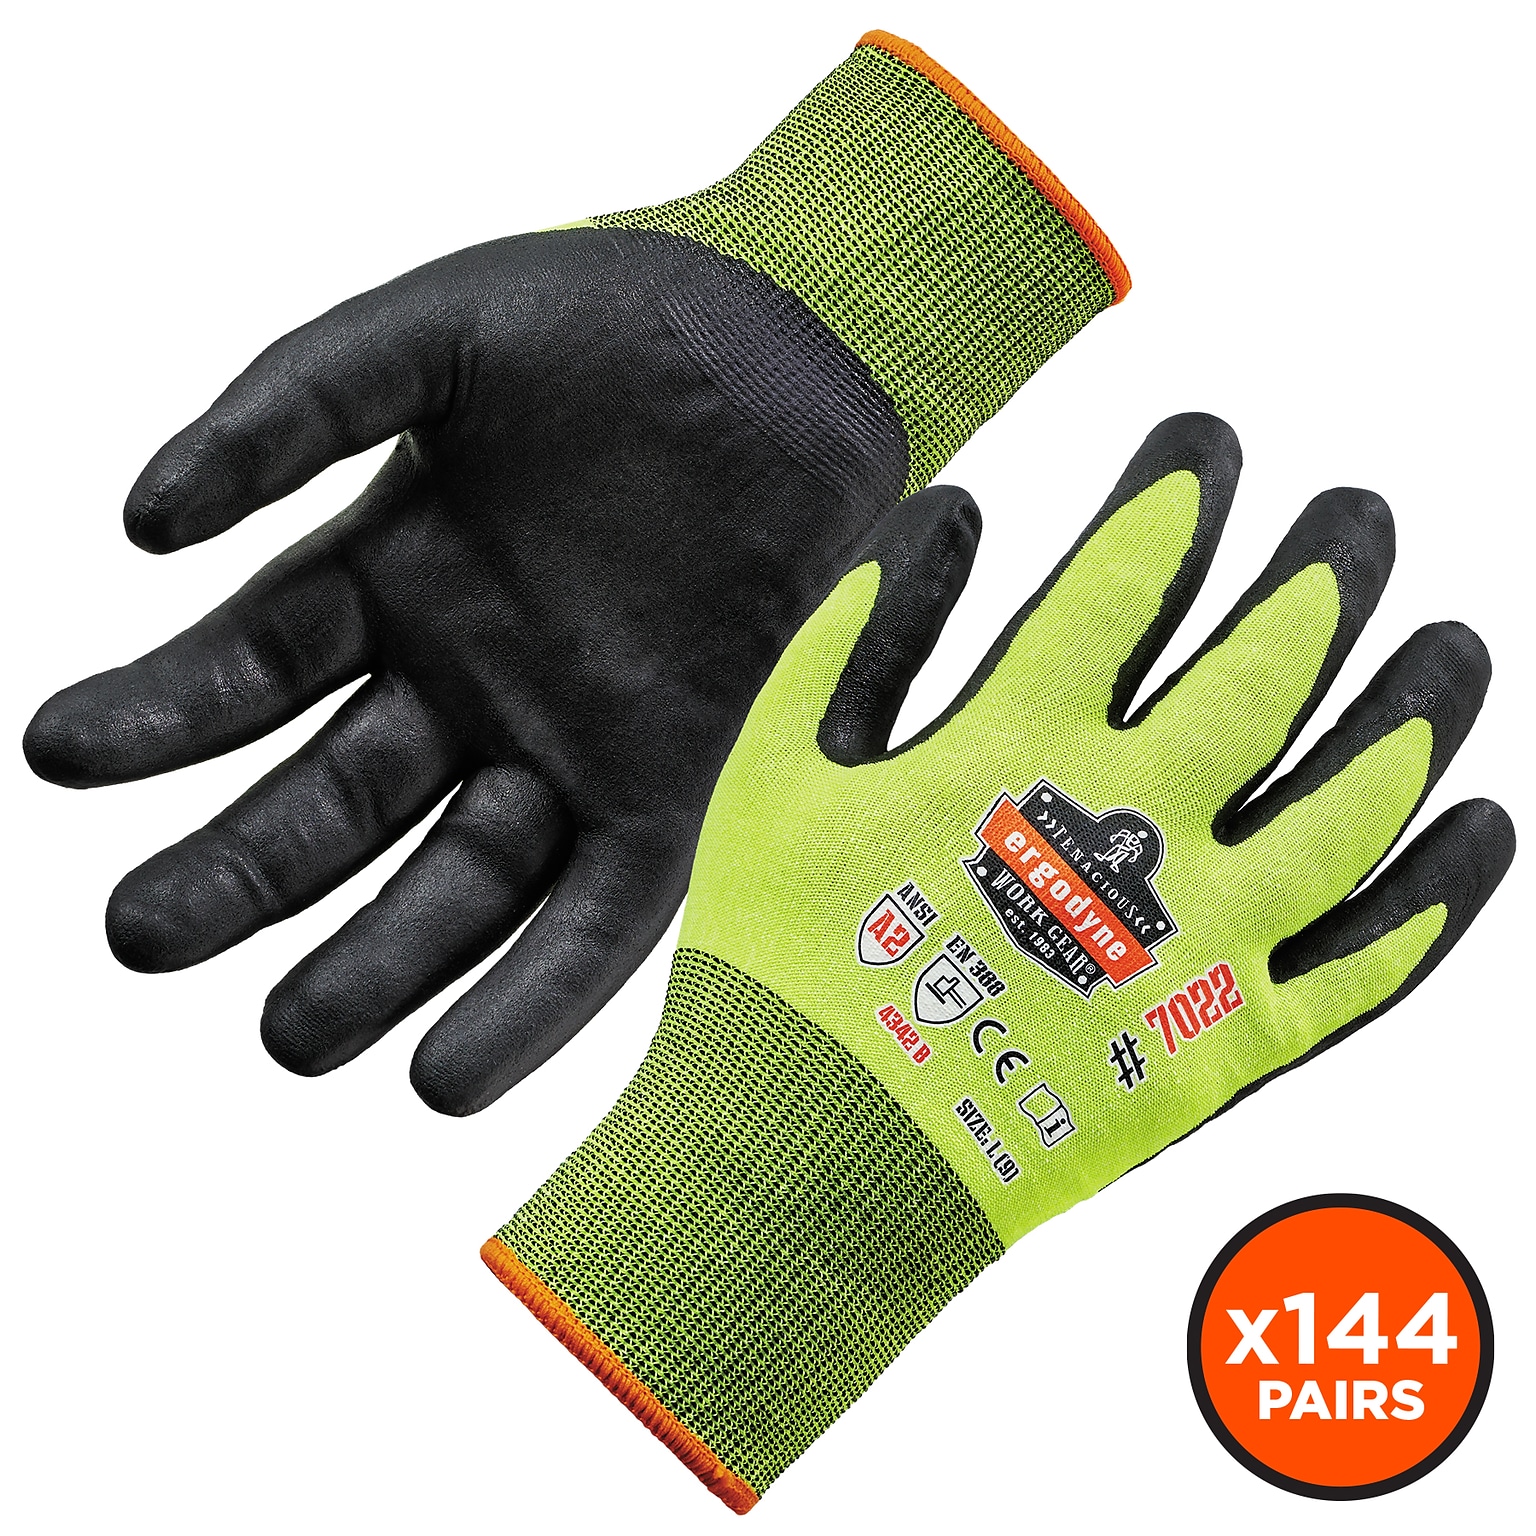 Ergodyne ProFlex 7022 Hi-Vis Nitrile Coated Cut-Resistant Gloves, ANSI A2, Dry Grip, Lime, Large, 144 Pairs (17874)